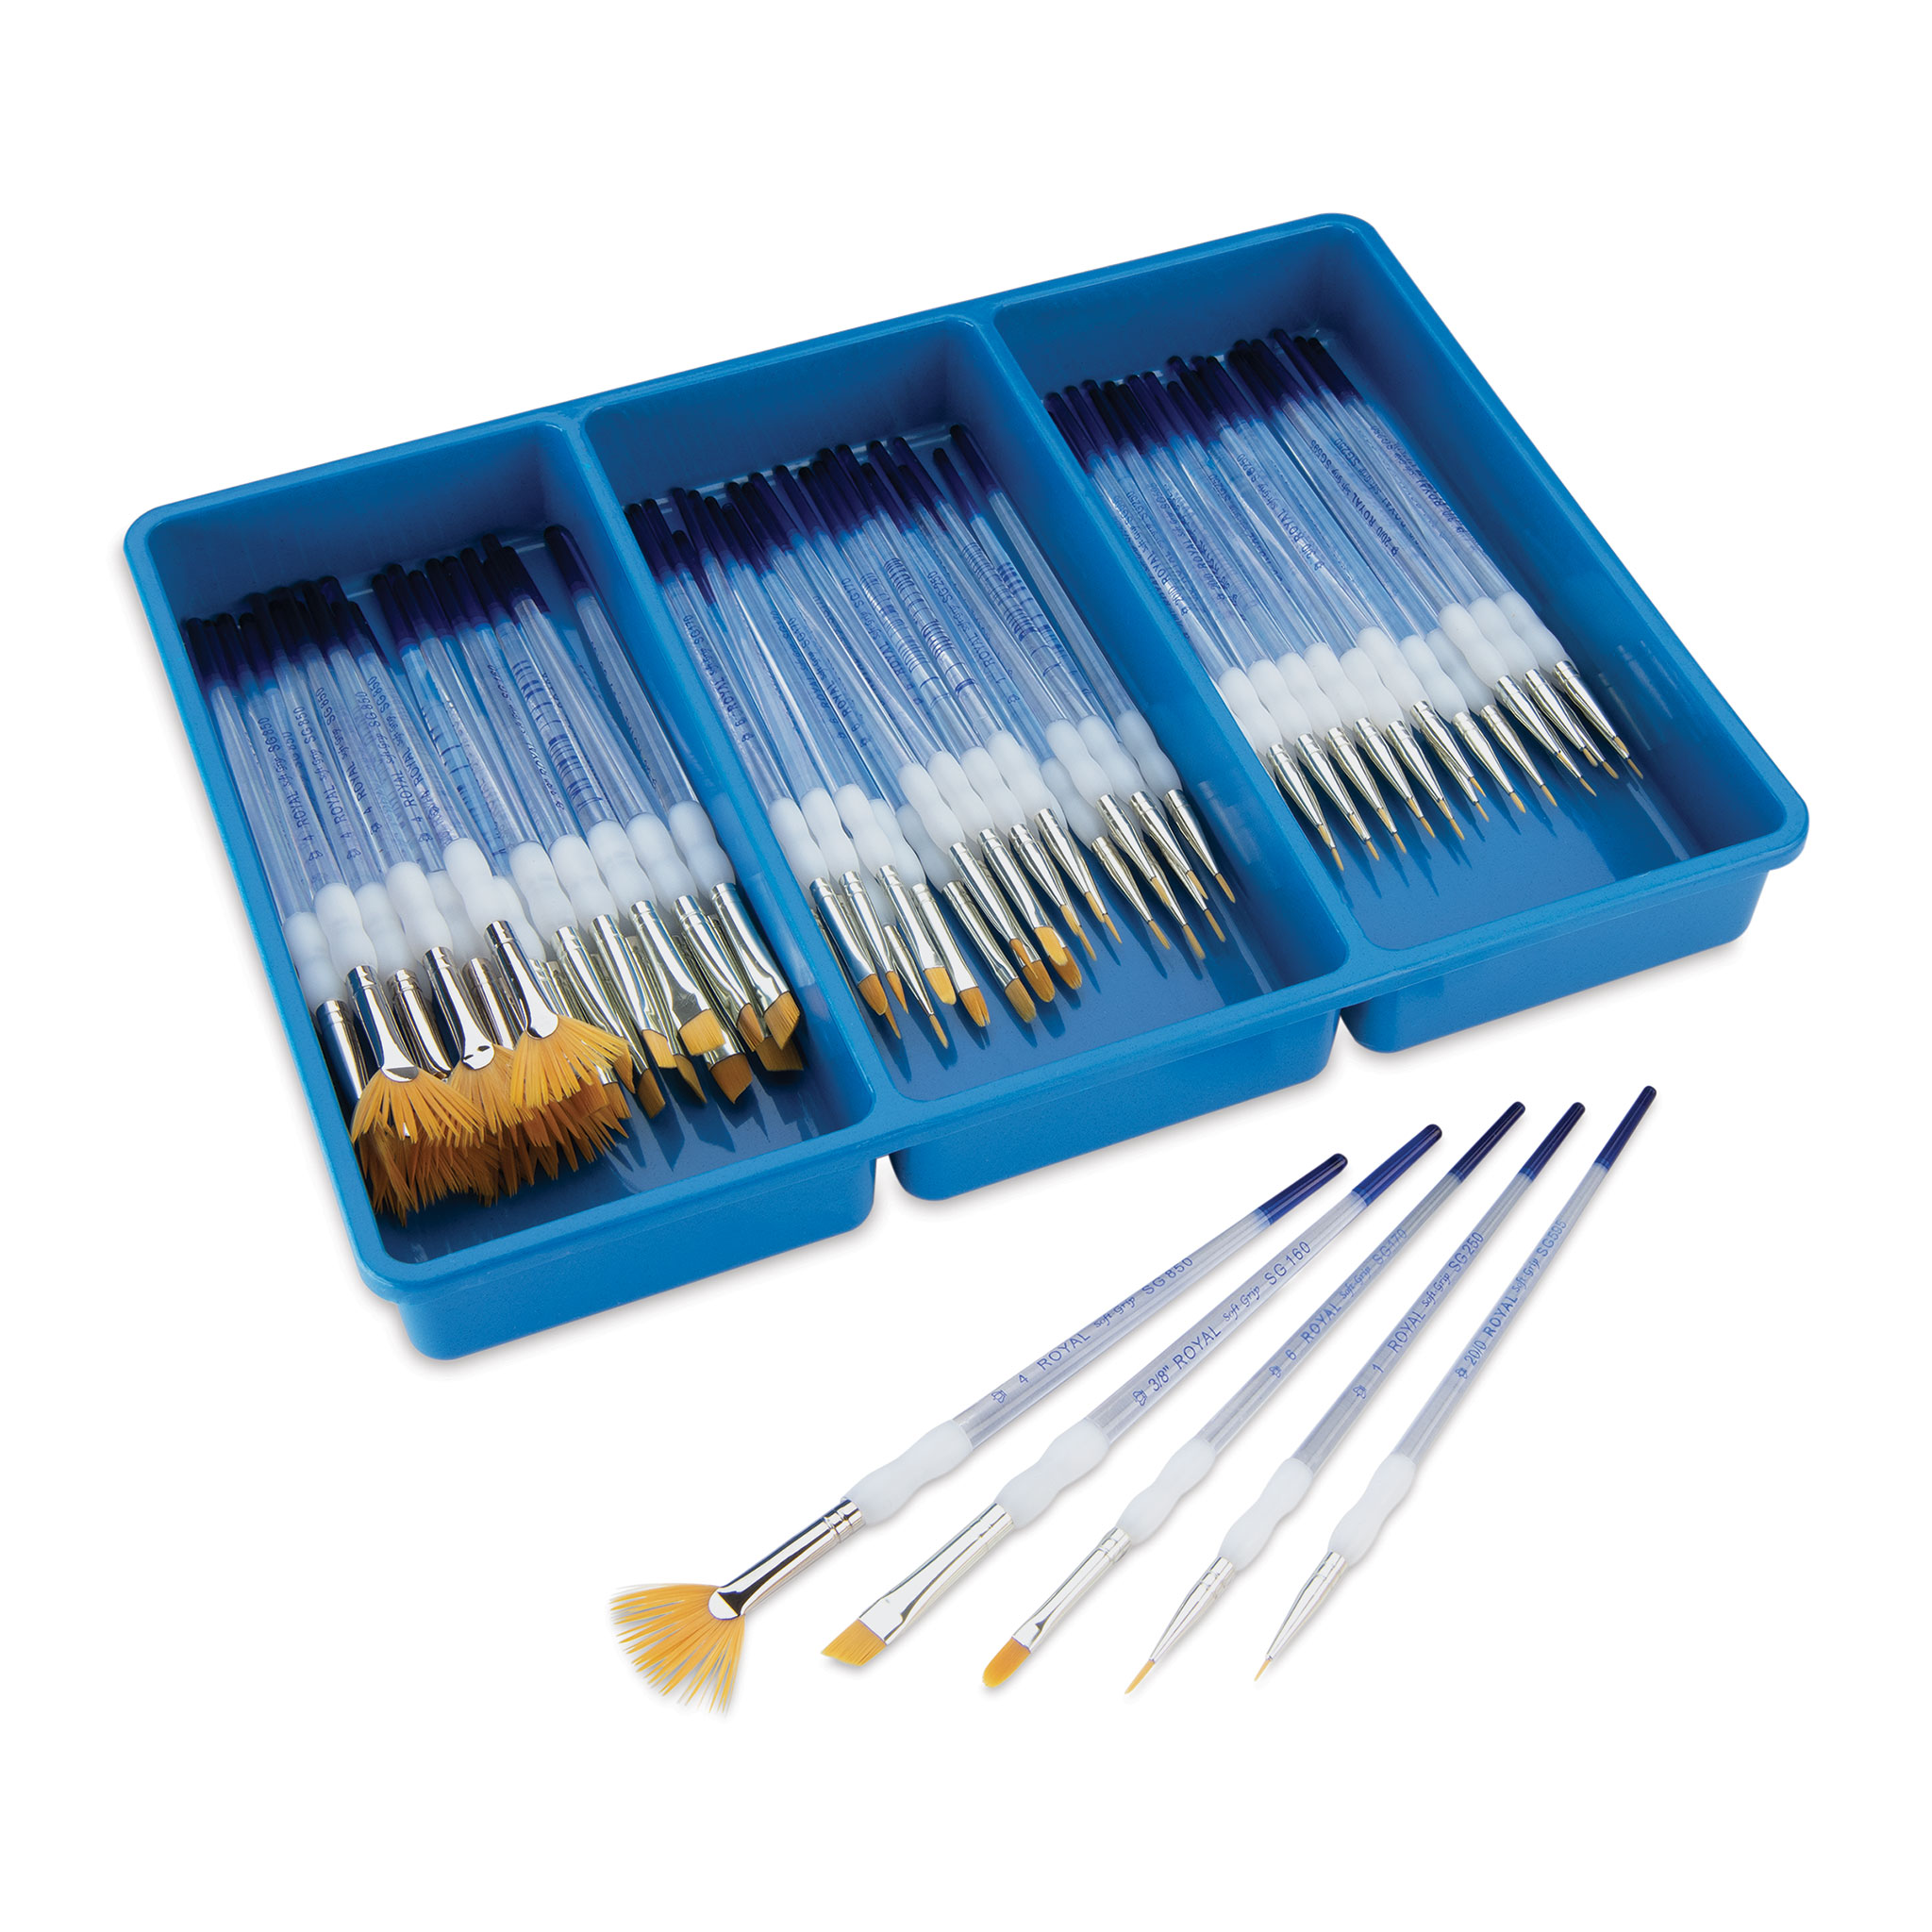 Blue 7-Piece Acrylic Straw & Brush Set